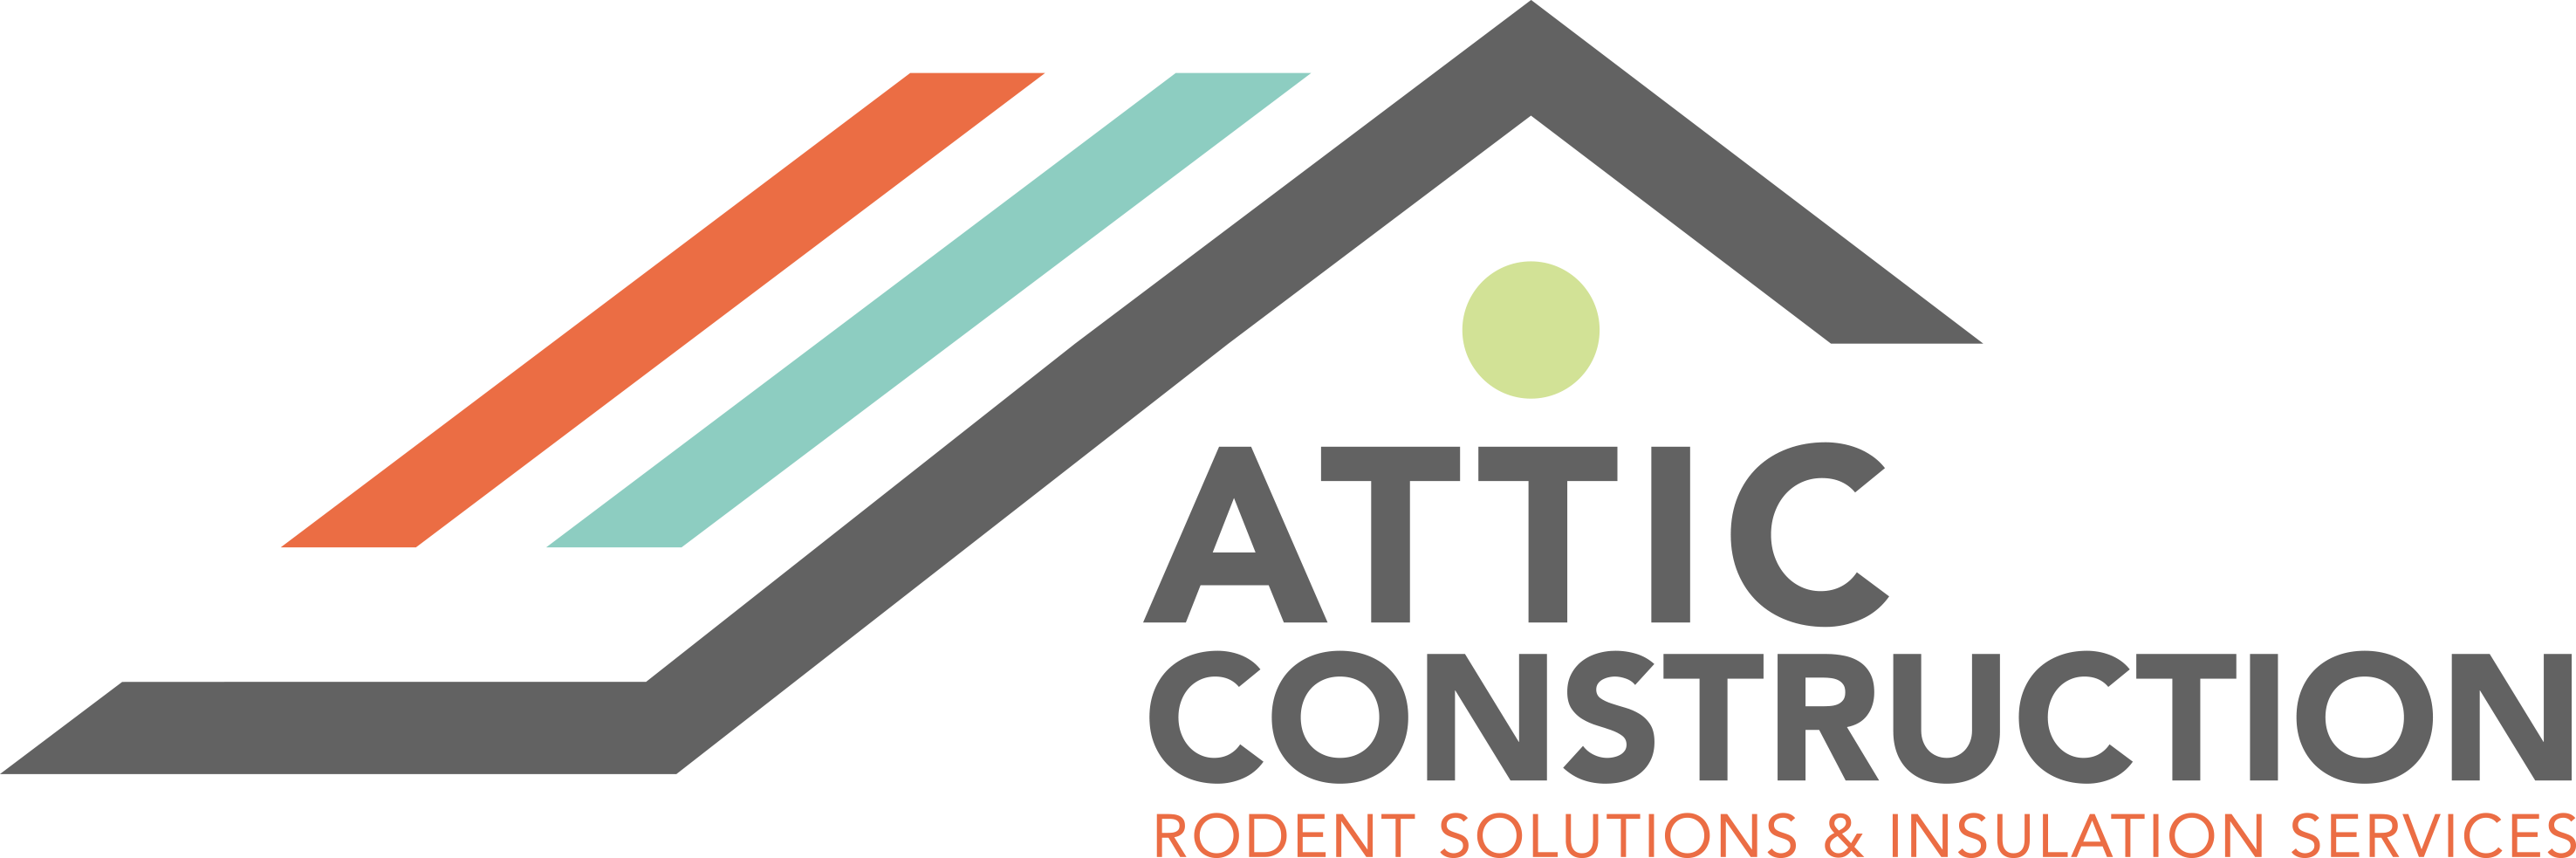 Attic Construction, Inc. Logo